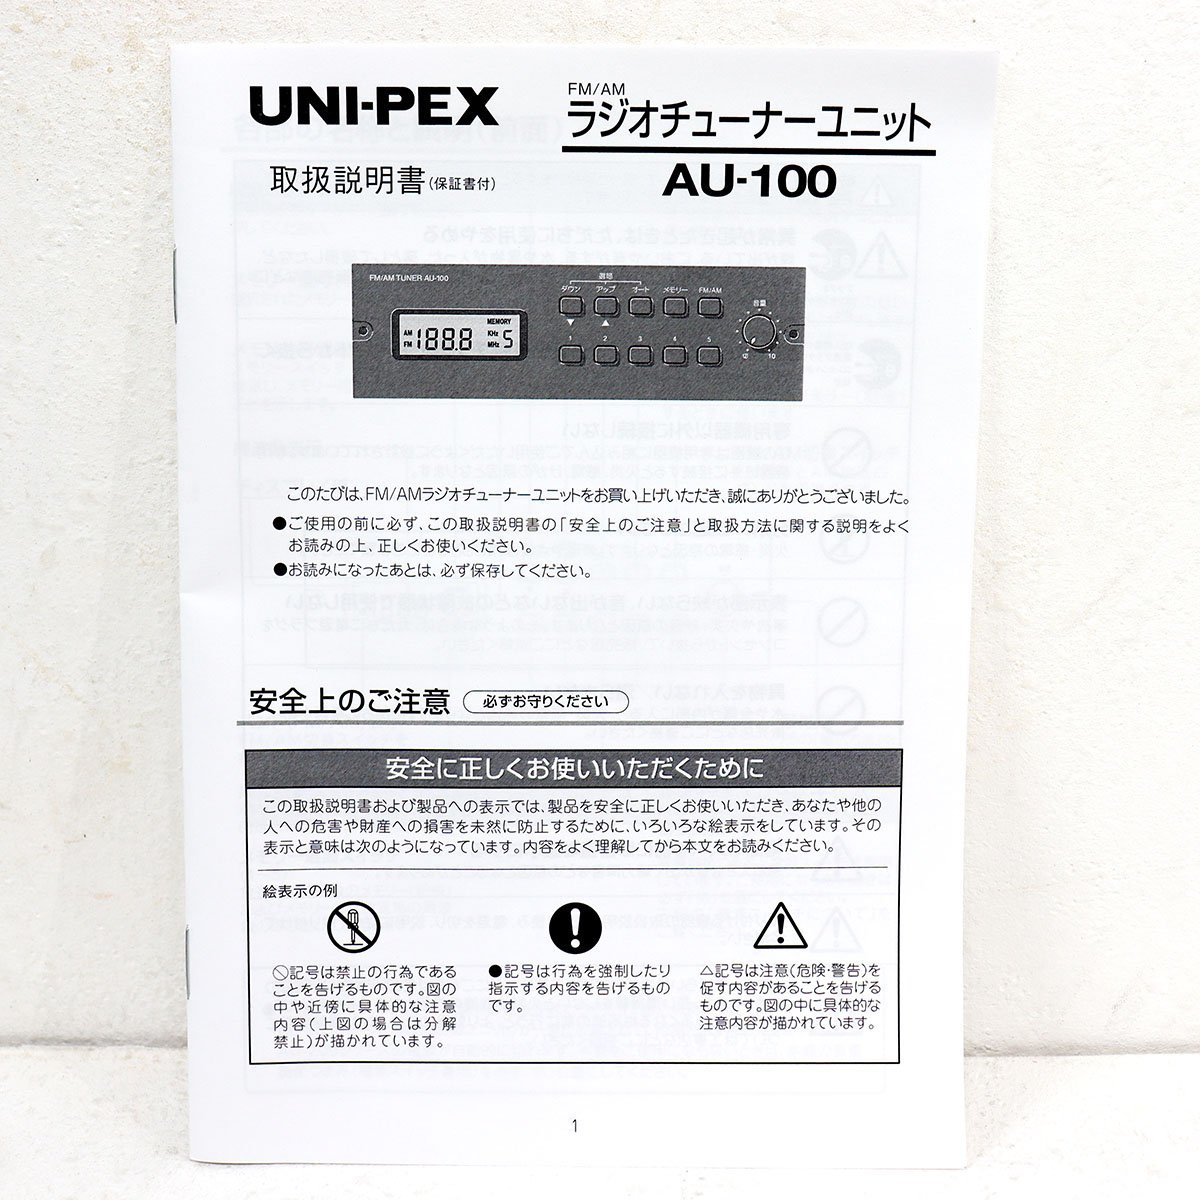 {M00204}UNI-PEX ( Uni peks) радио тюнер единица AU-100 не использовался товар #